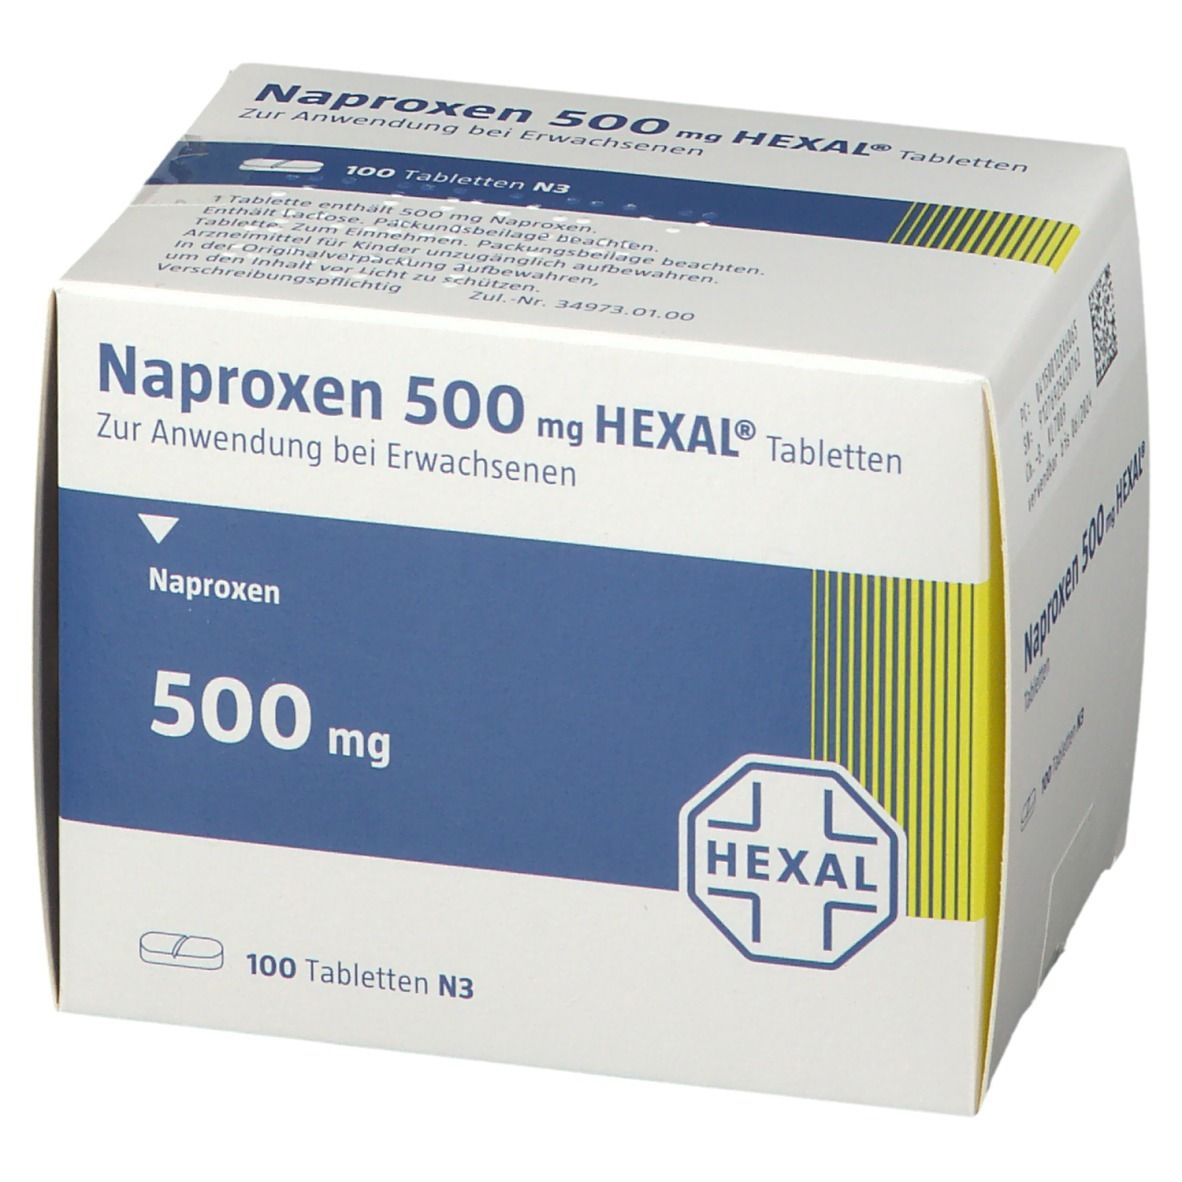 Naproxen 500 mg HEXAL®